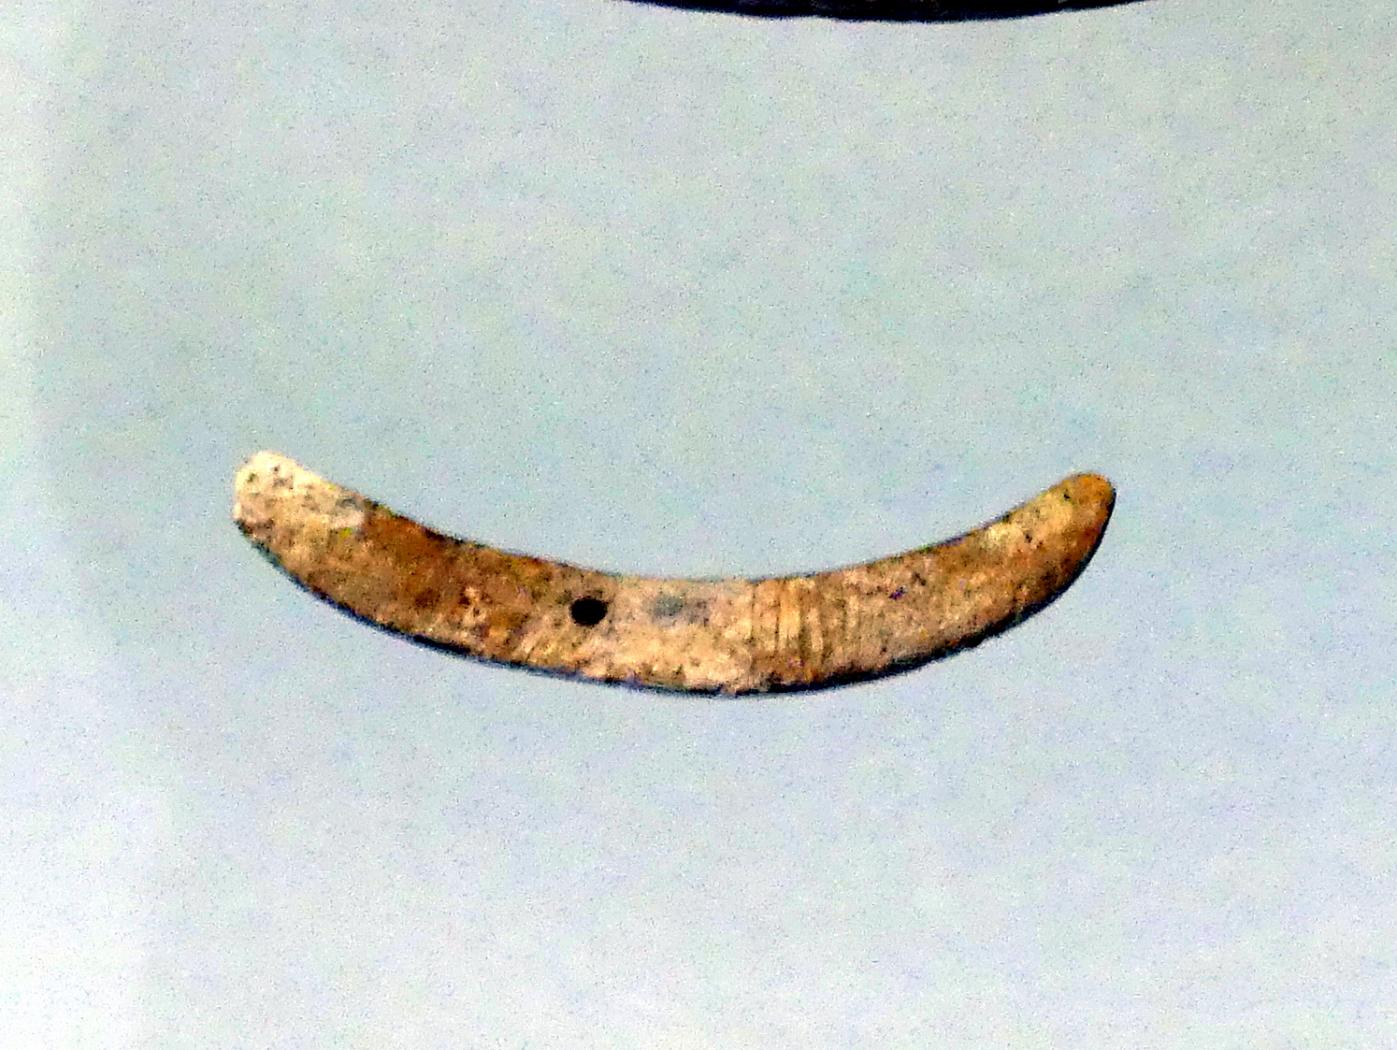 Knochenanhänger, Endneolithikum, 2800 - 1700 v. Chr., Bild 1/2